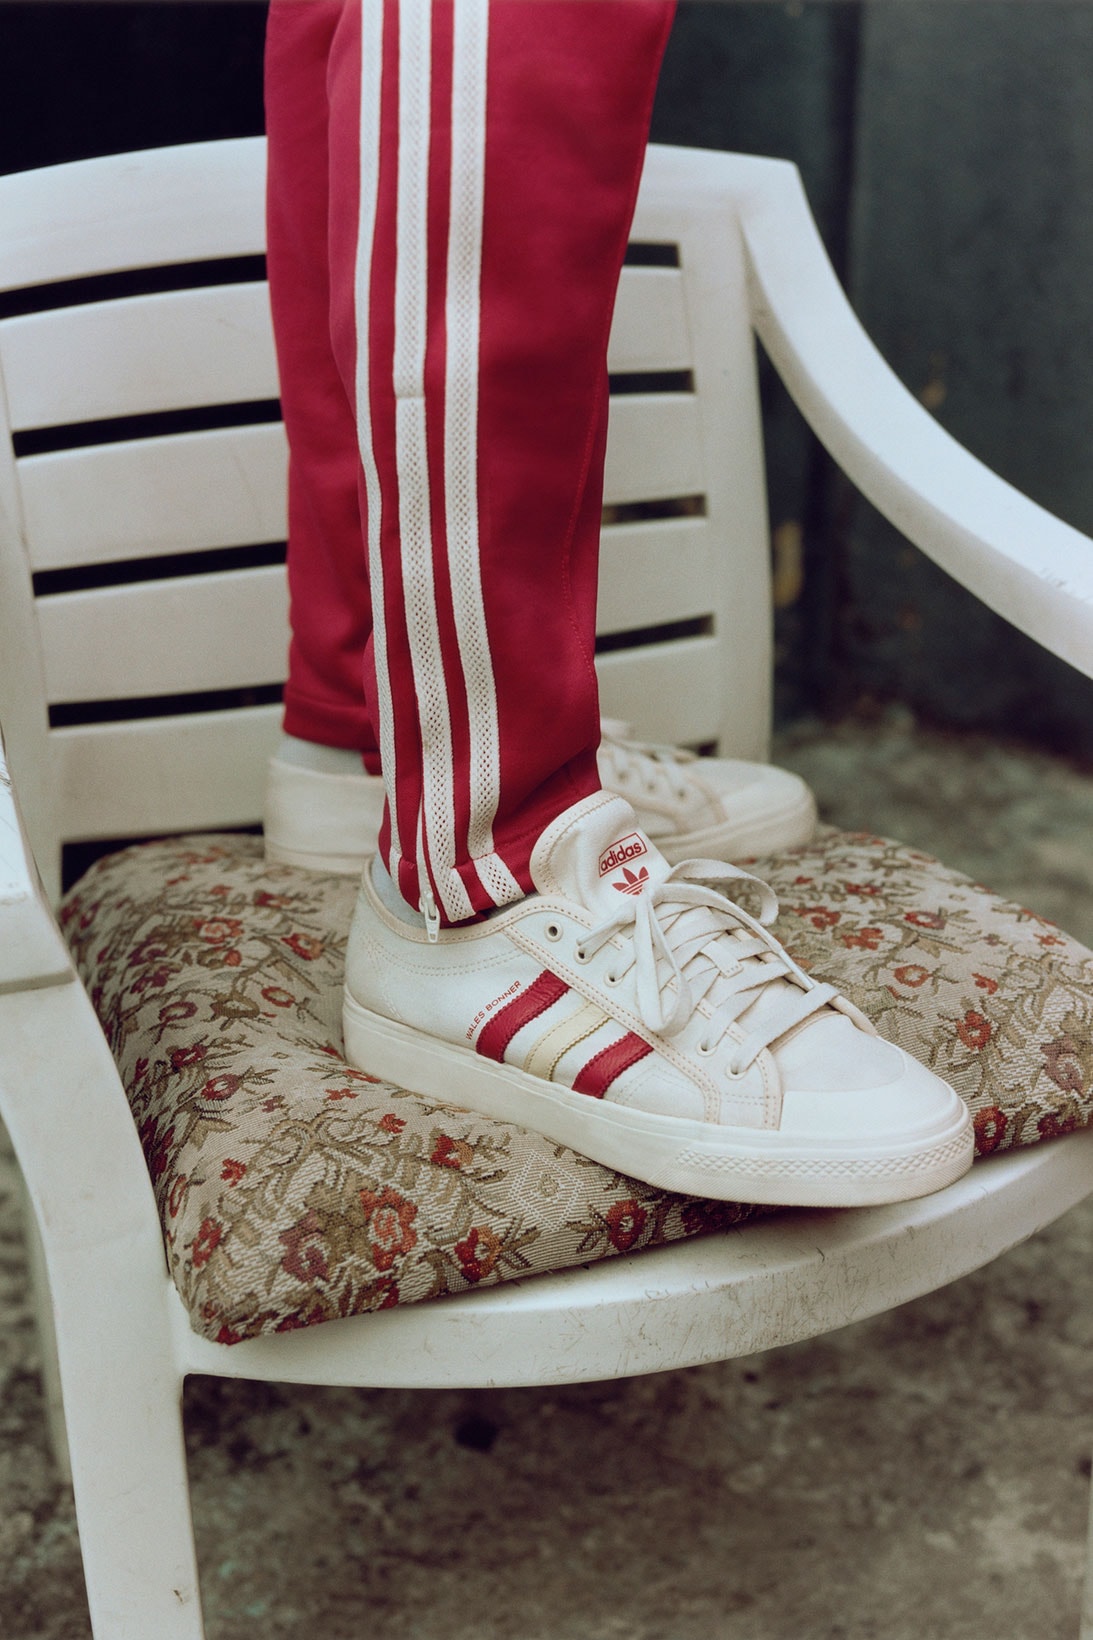 adidas originals wale bonner fall winter collaboration samba sneakers red white